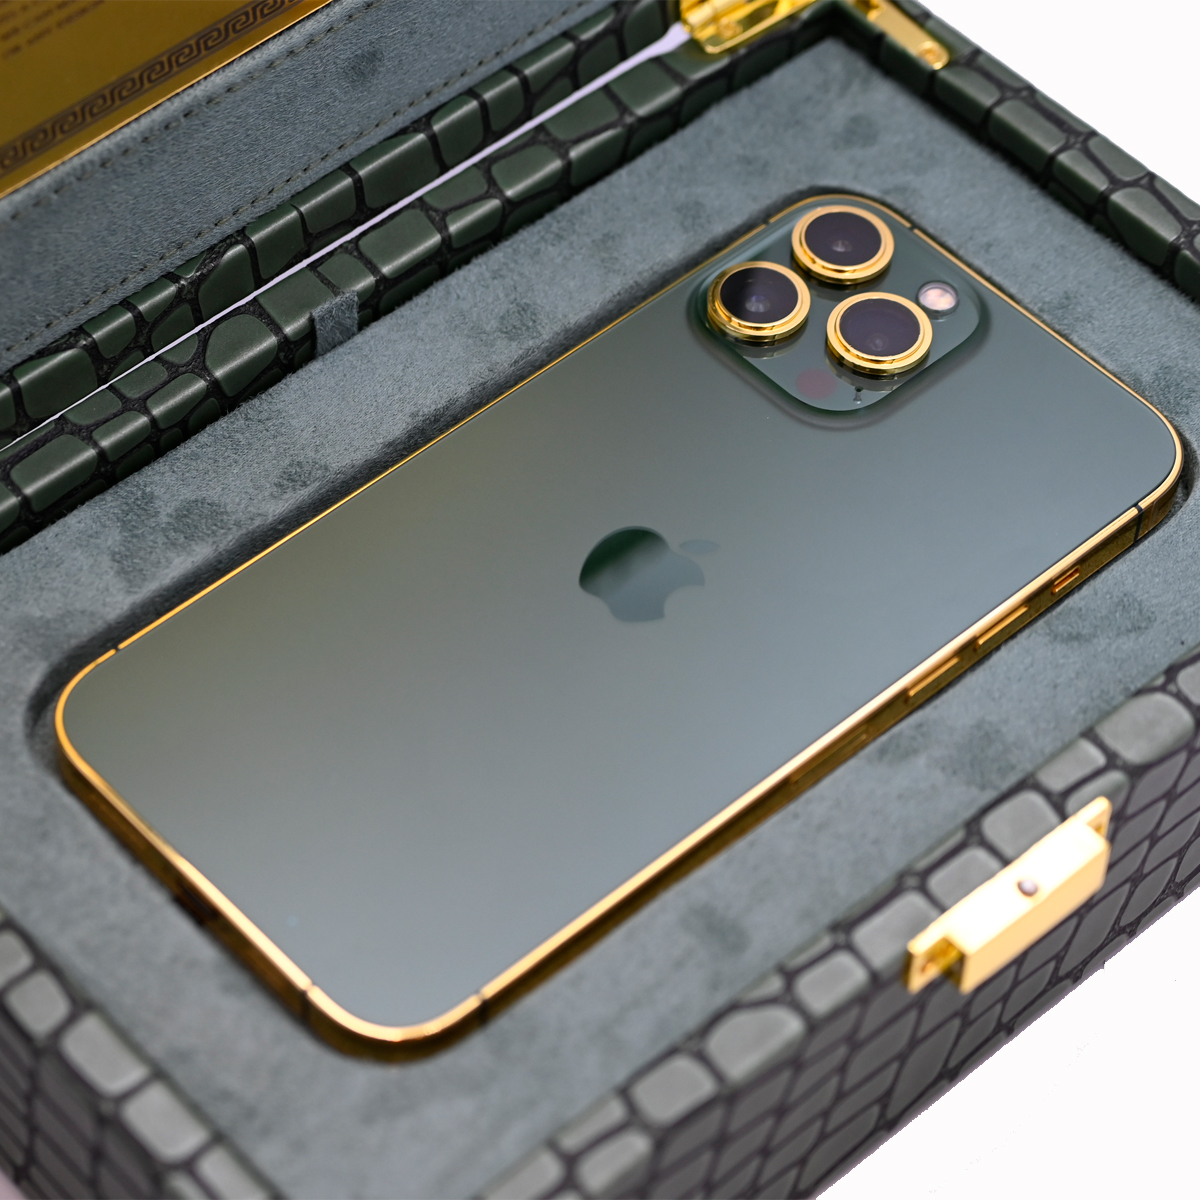 Caviar Luxury Customized 24k Gold Frame iPhone 13 Pro - Midnight Green 512 GB